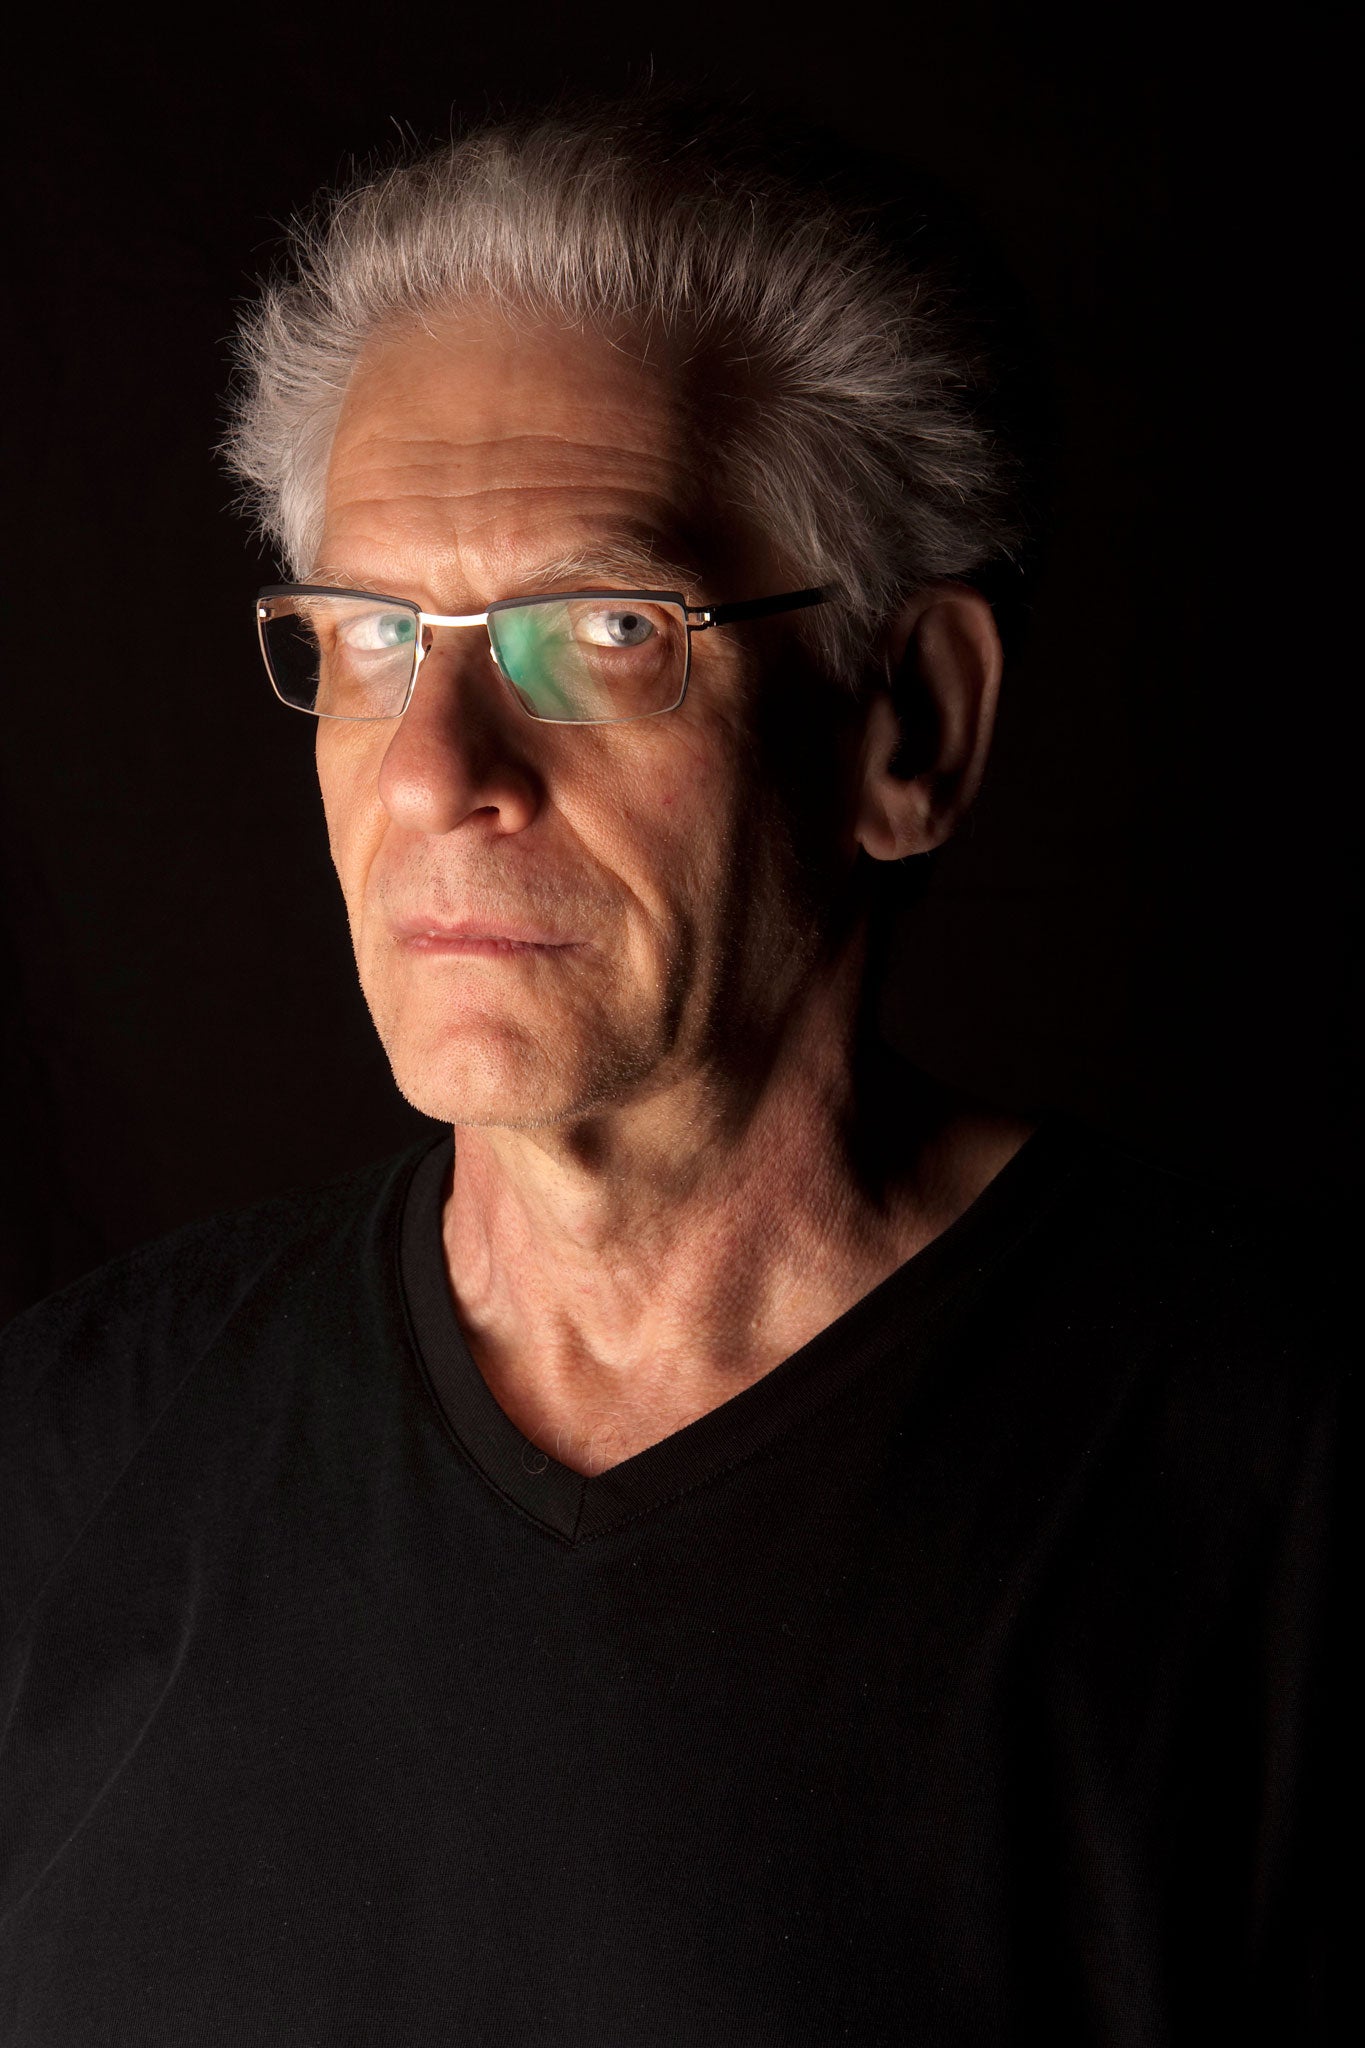 Perversely playful: Director David Cronenberg